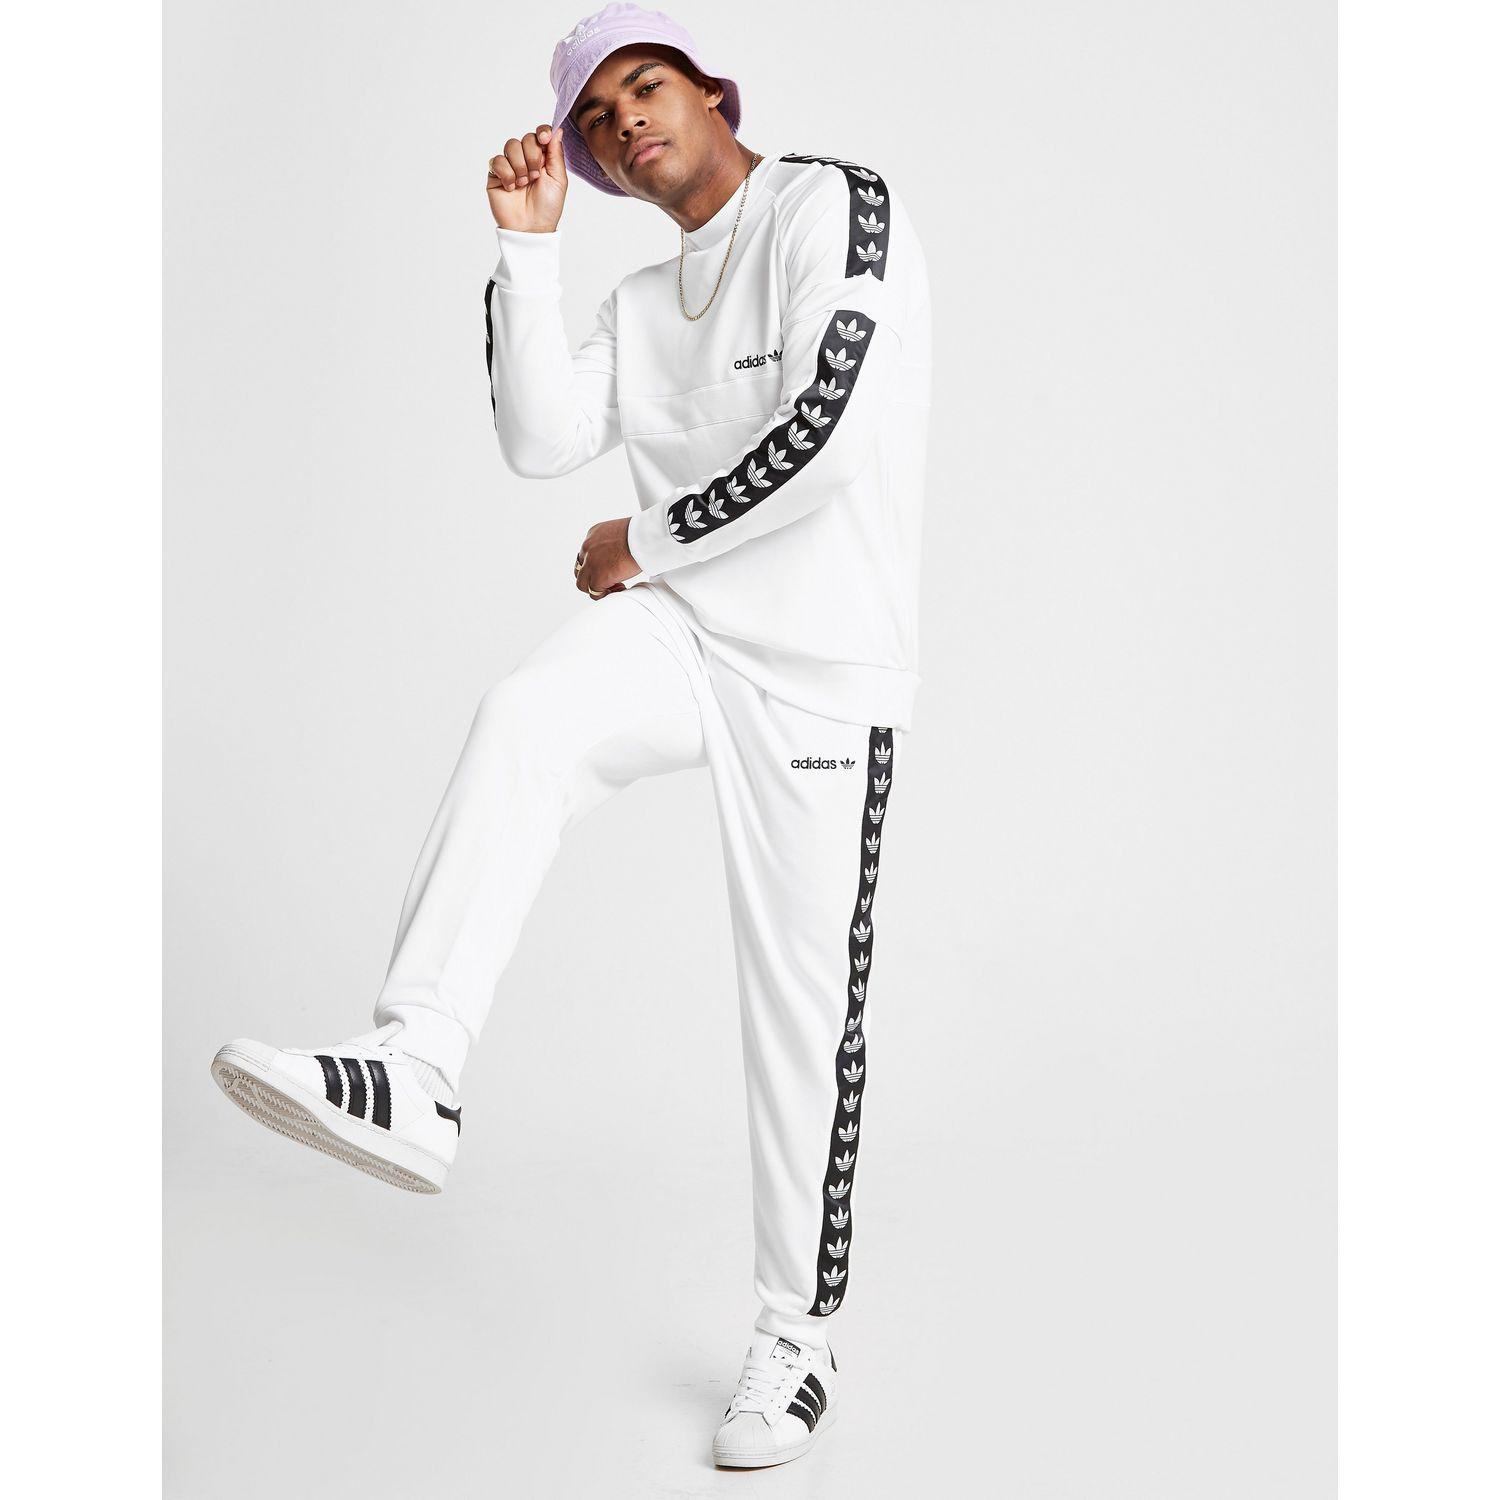 adidas Originals Cotton Tape Itasca Crew Sweatshirt in White/Black (White)  for Men - Lyst